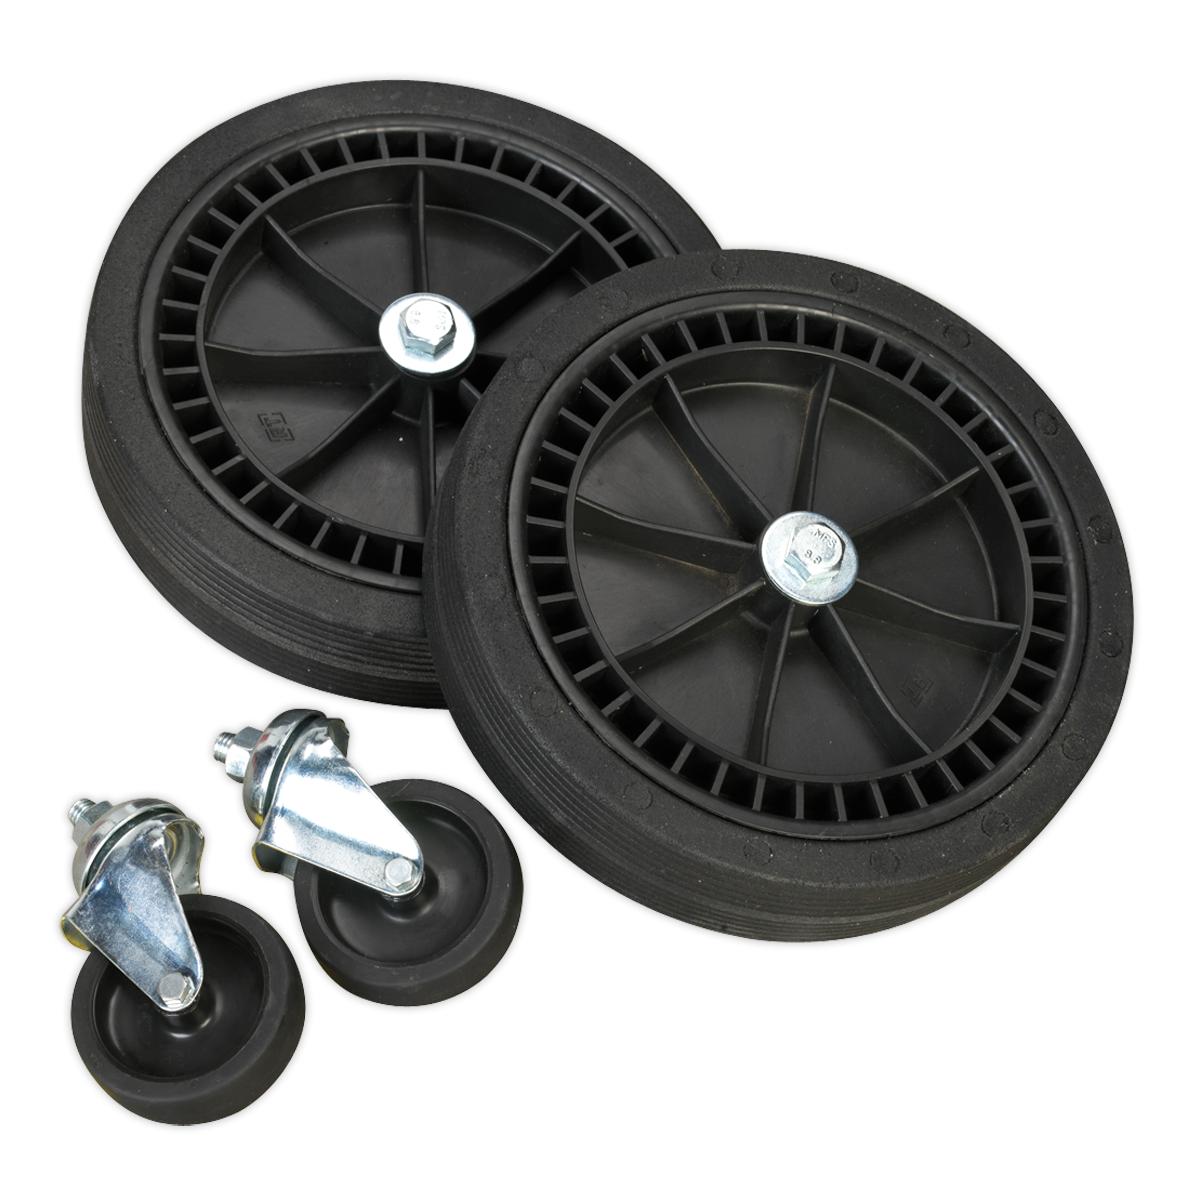 Sealey Wheel Kit for Fixed Compressors - 2 Castors & 2 Fixed